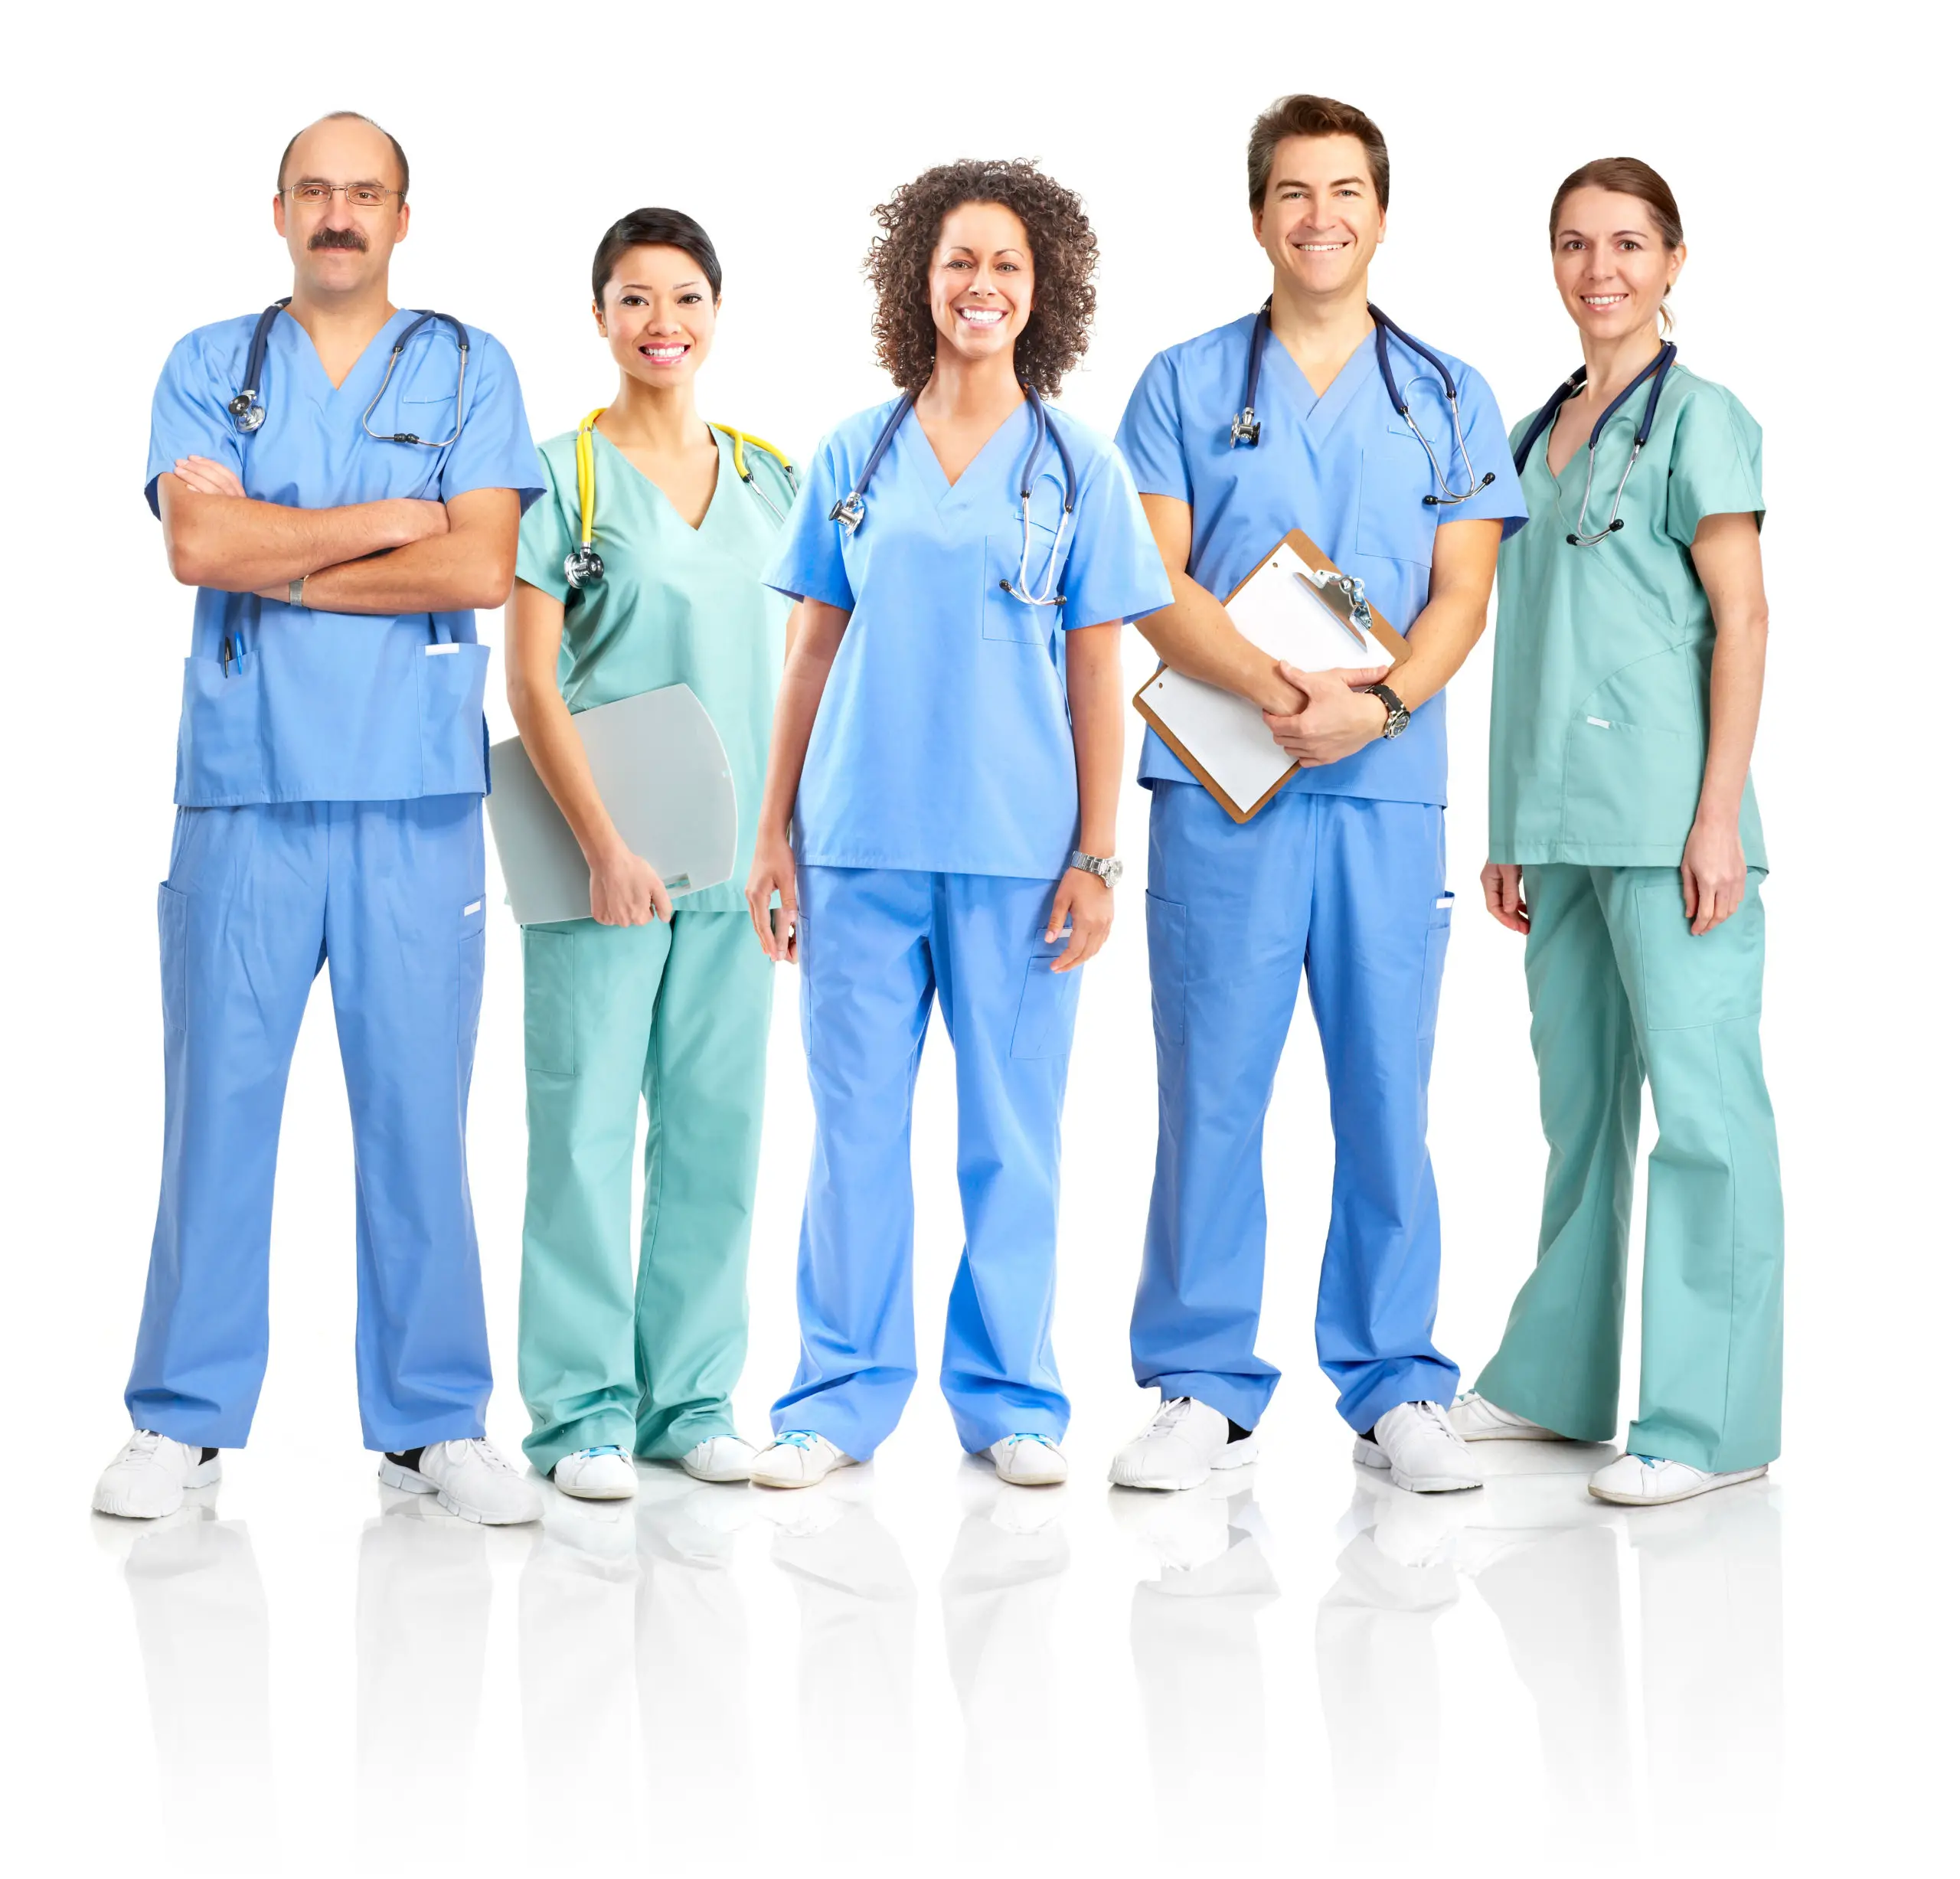 SAVE Act: Increasing Freedom for N.C. Nurses